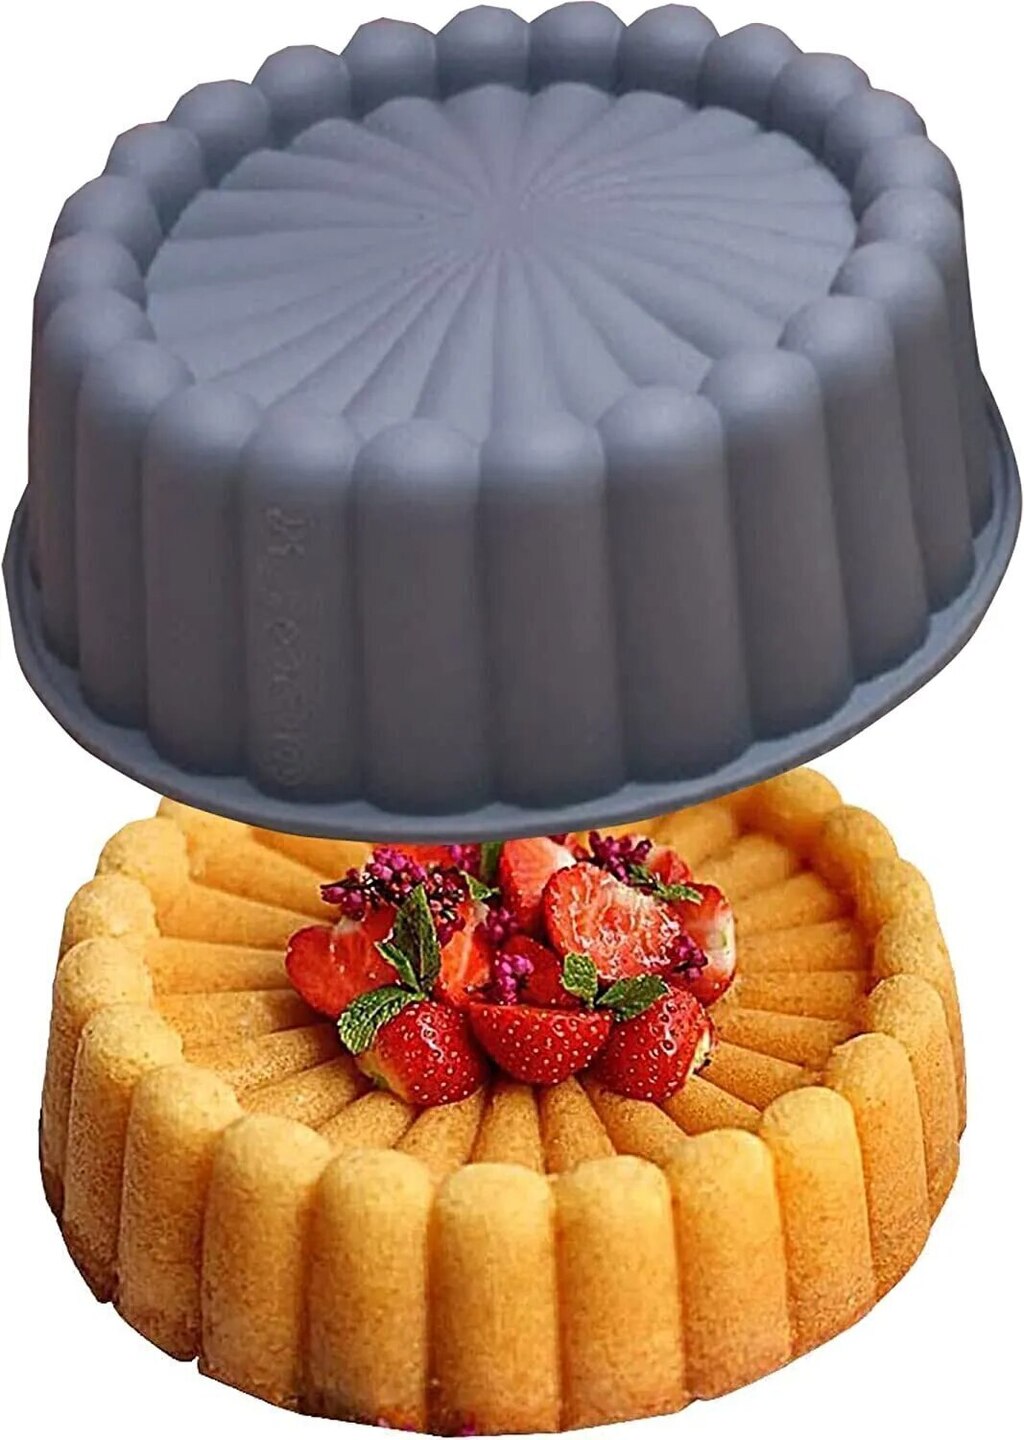 Compra online de Molde antiaderente de bolo fácil, molde de